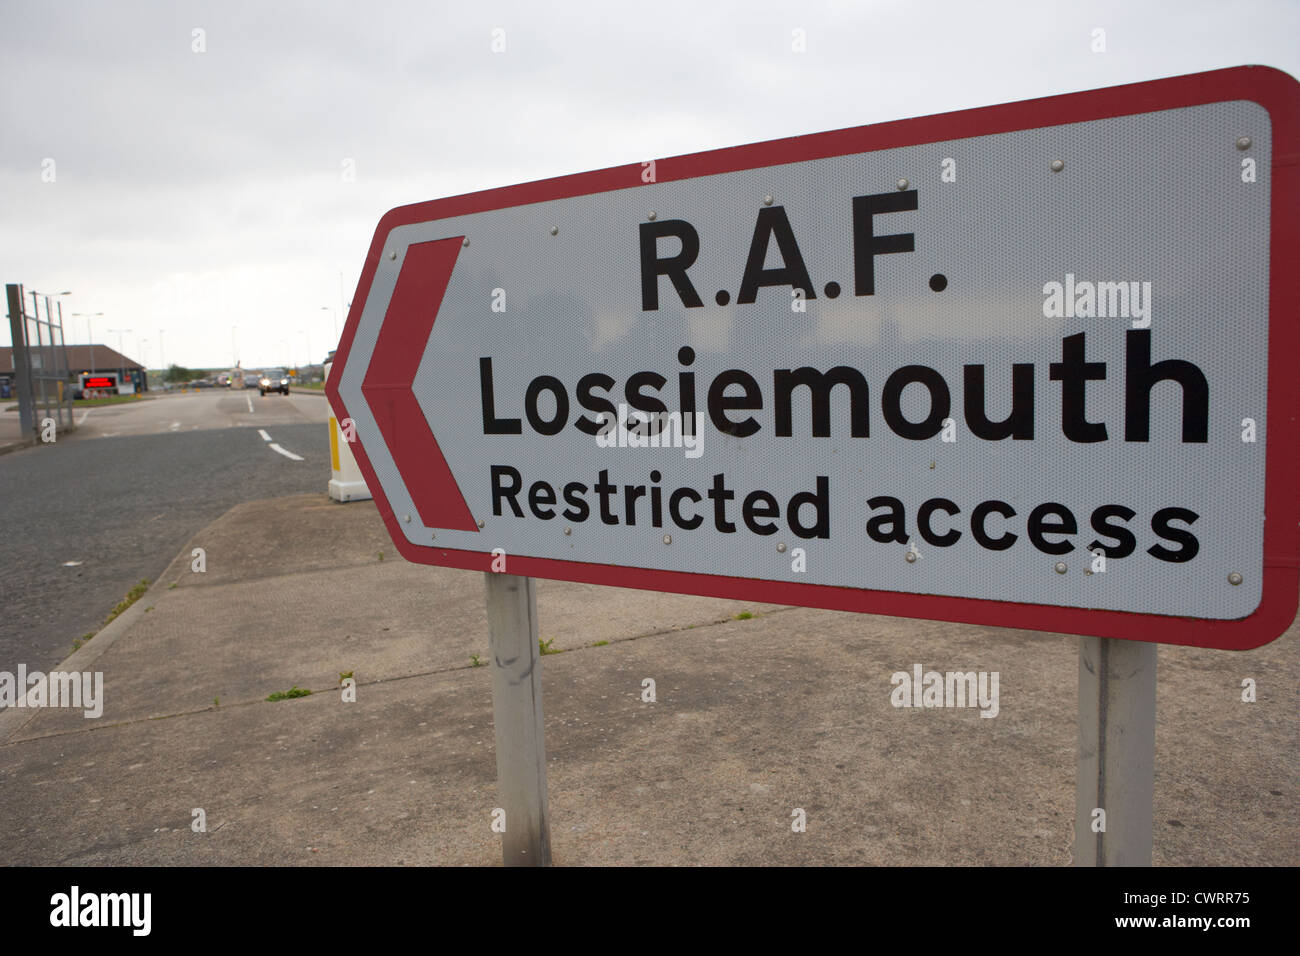 RAF Lossiemouth air force base scotland uk Stock Photo